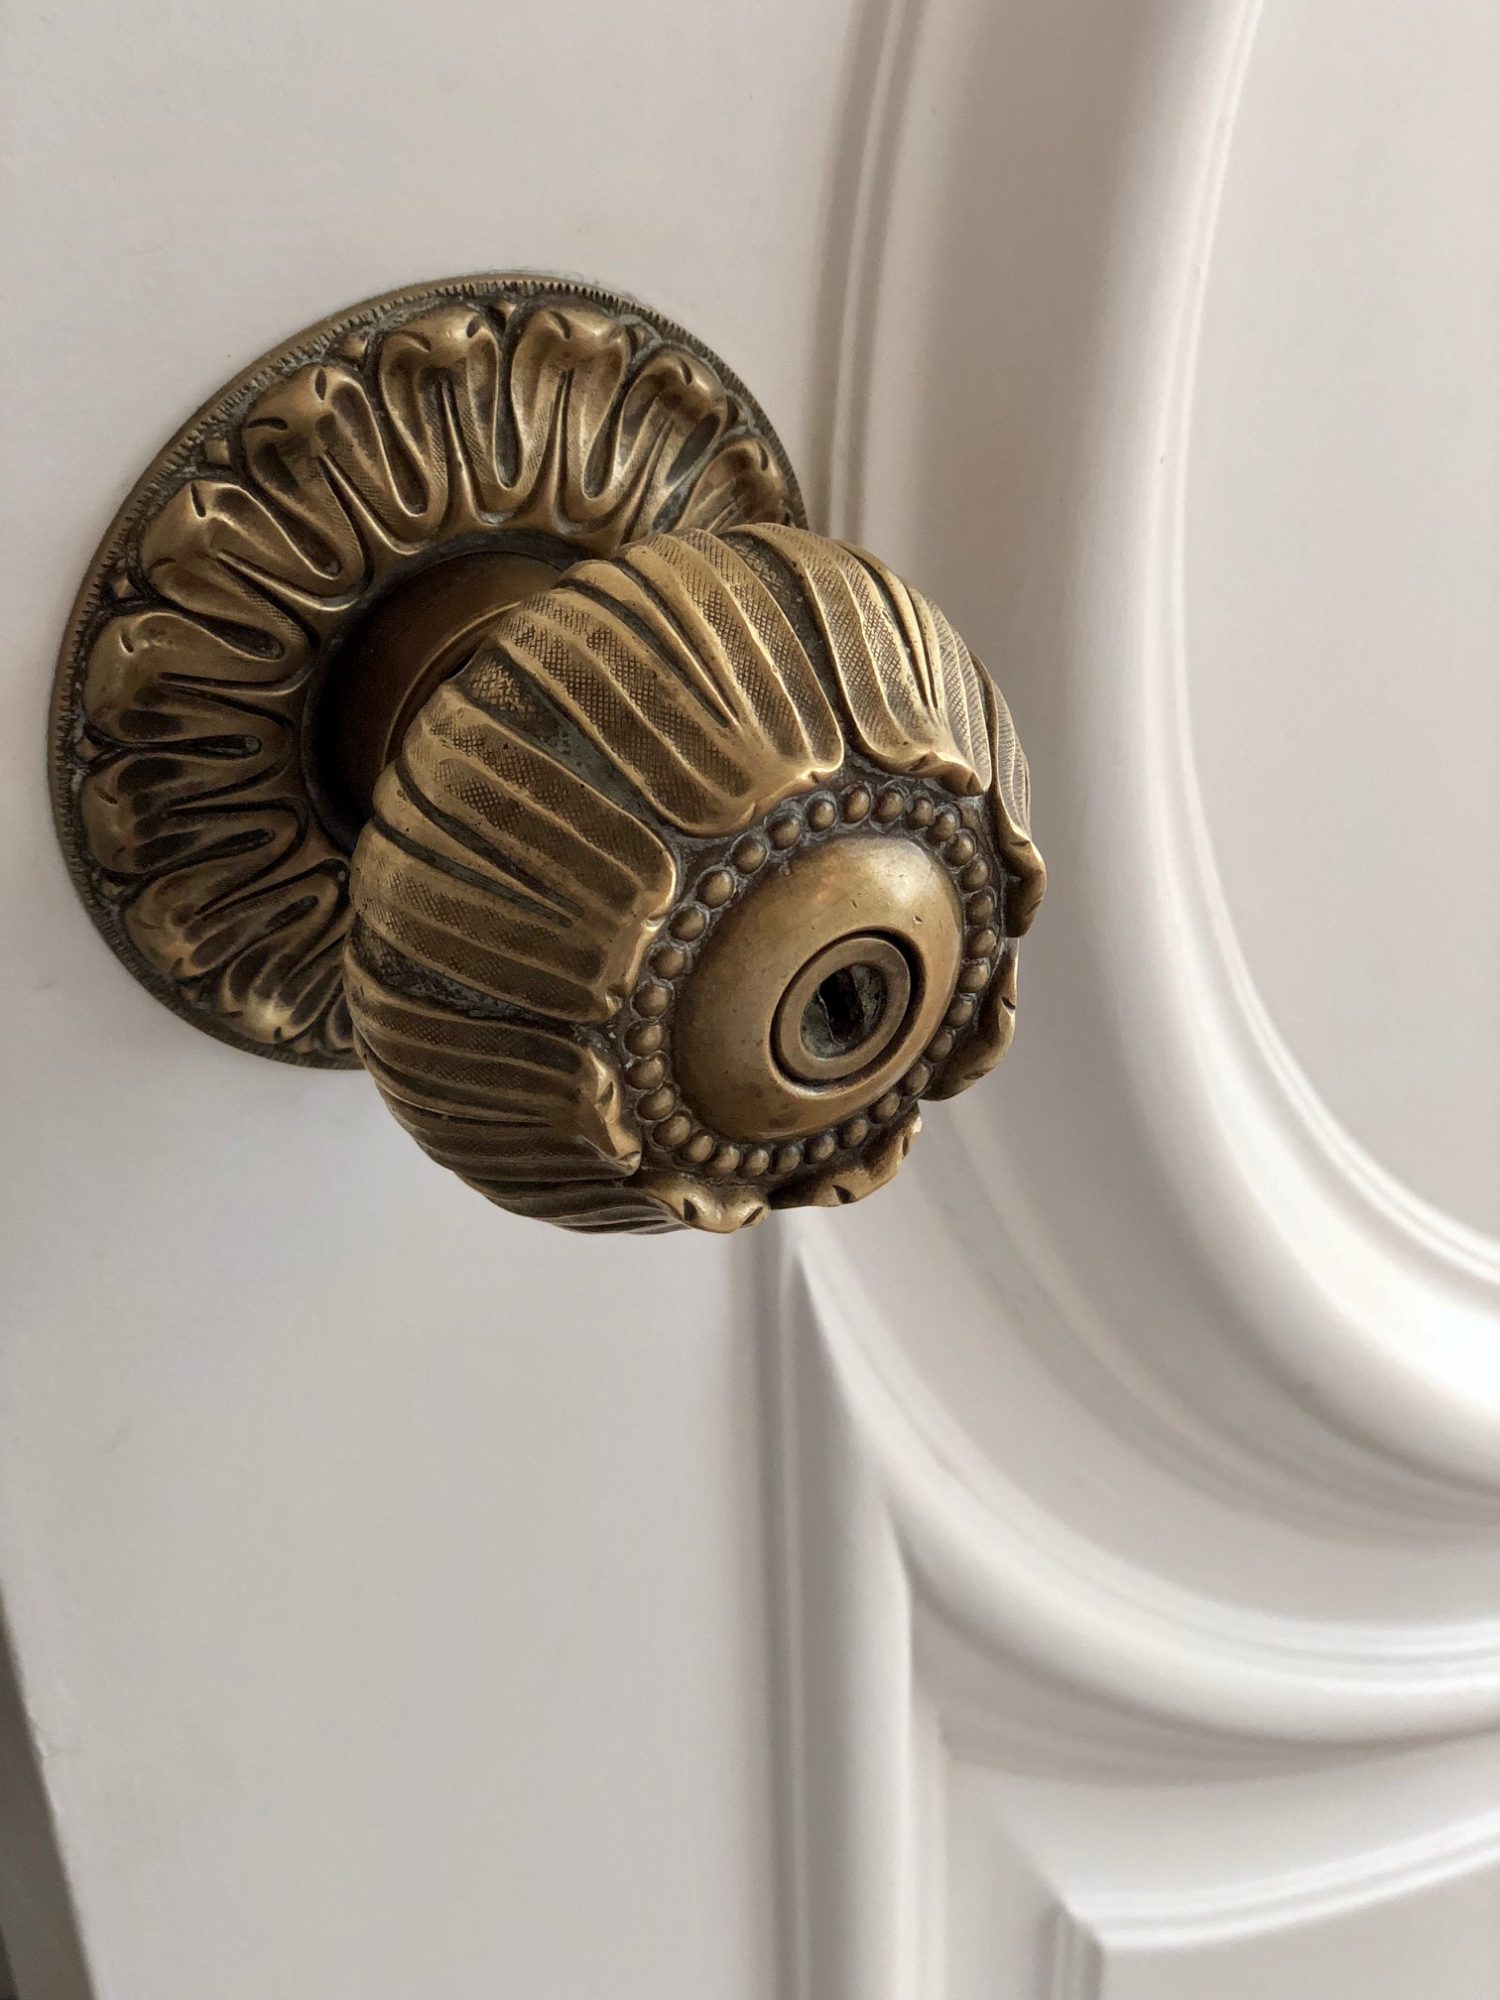 Ornate brass doorknob